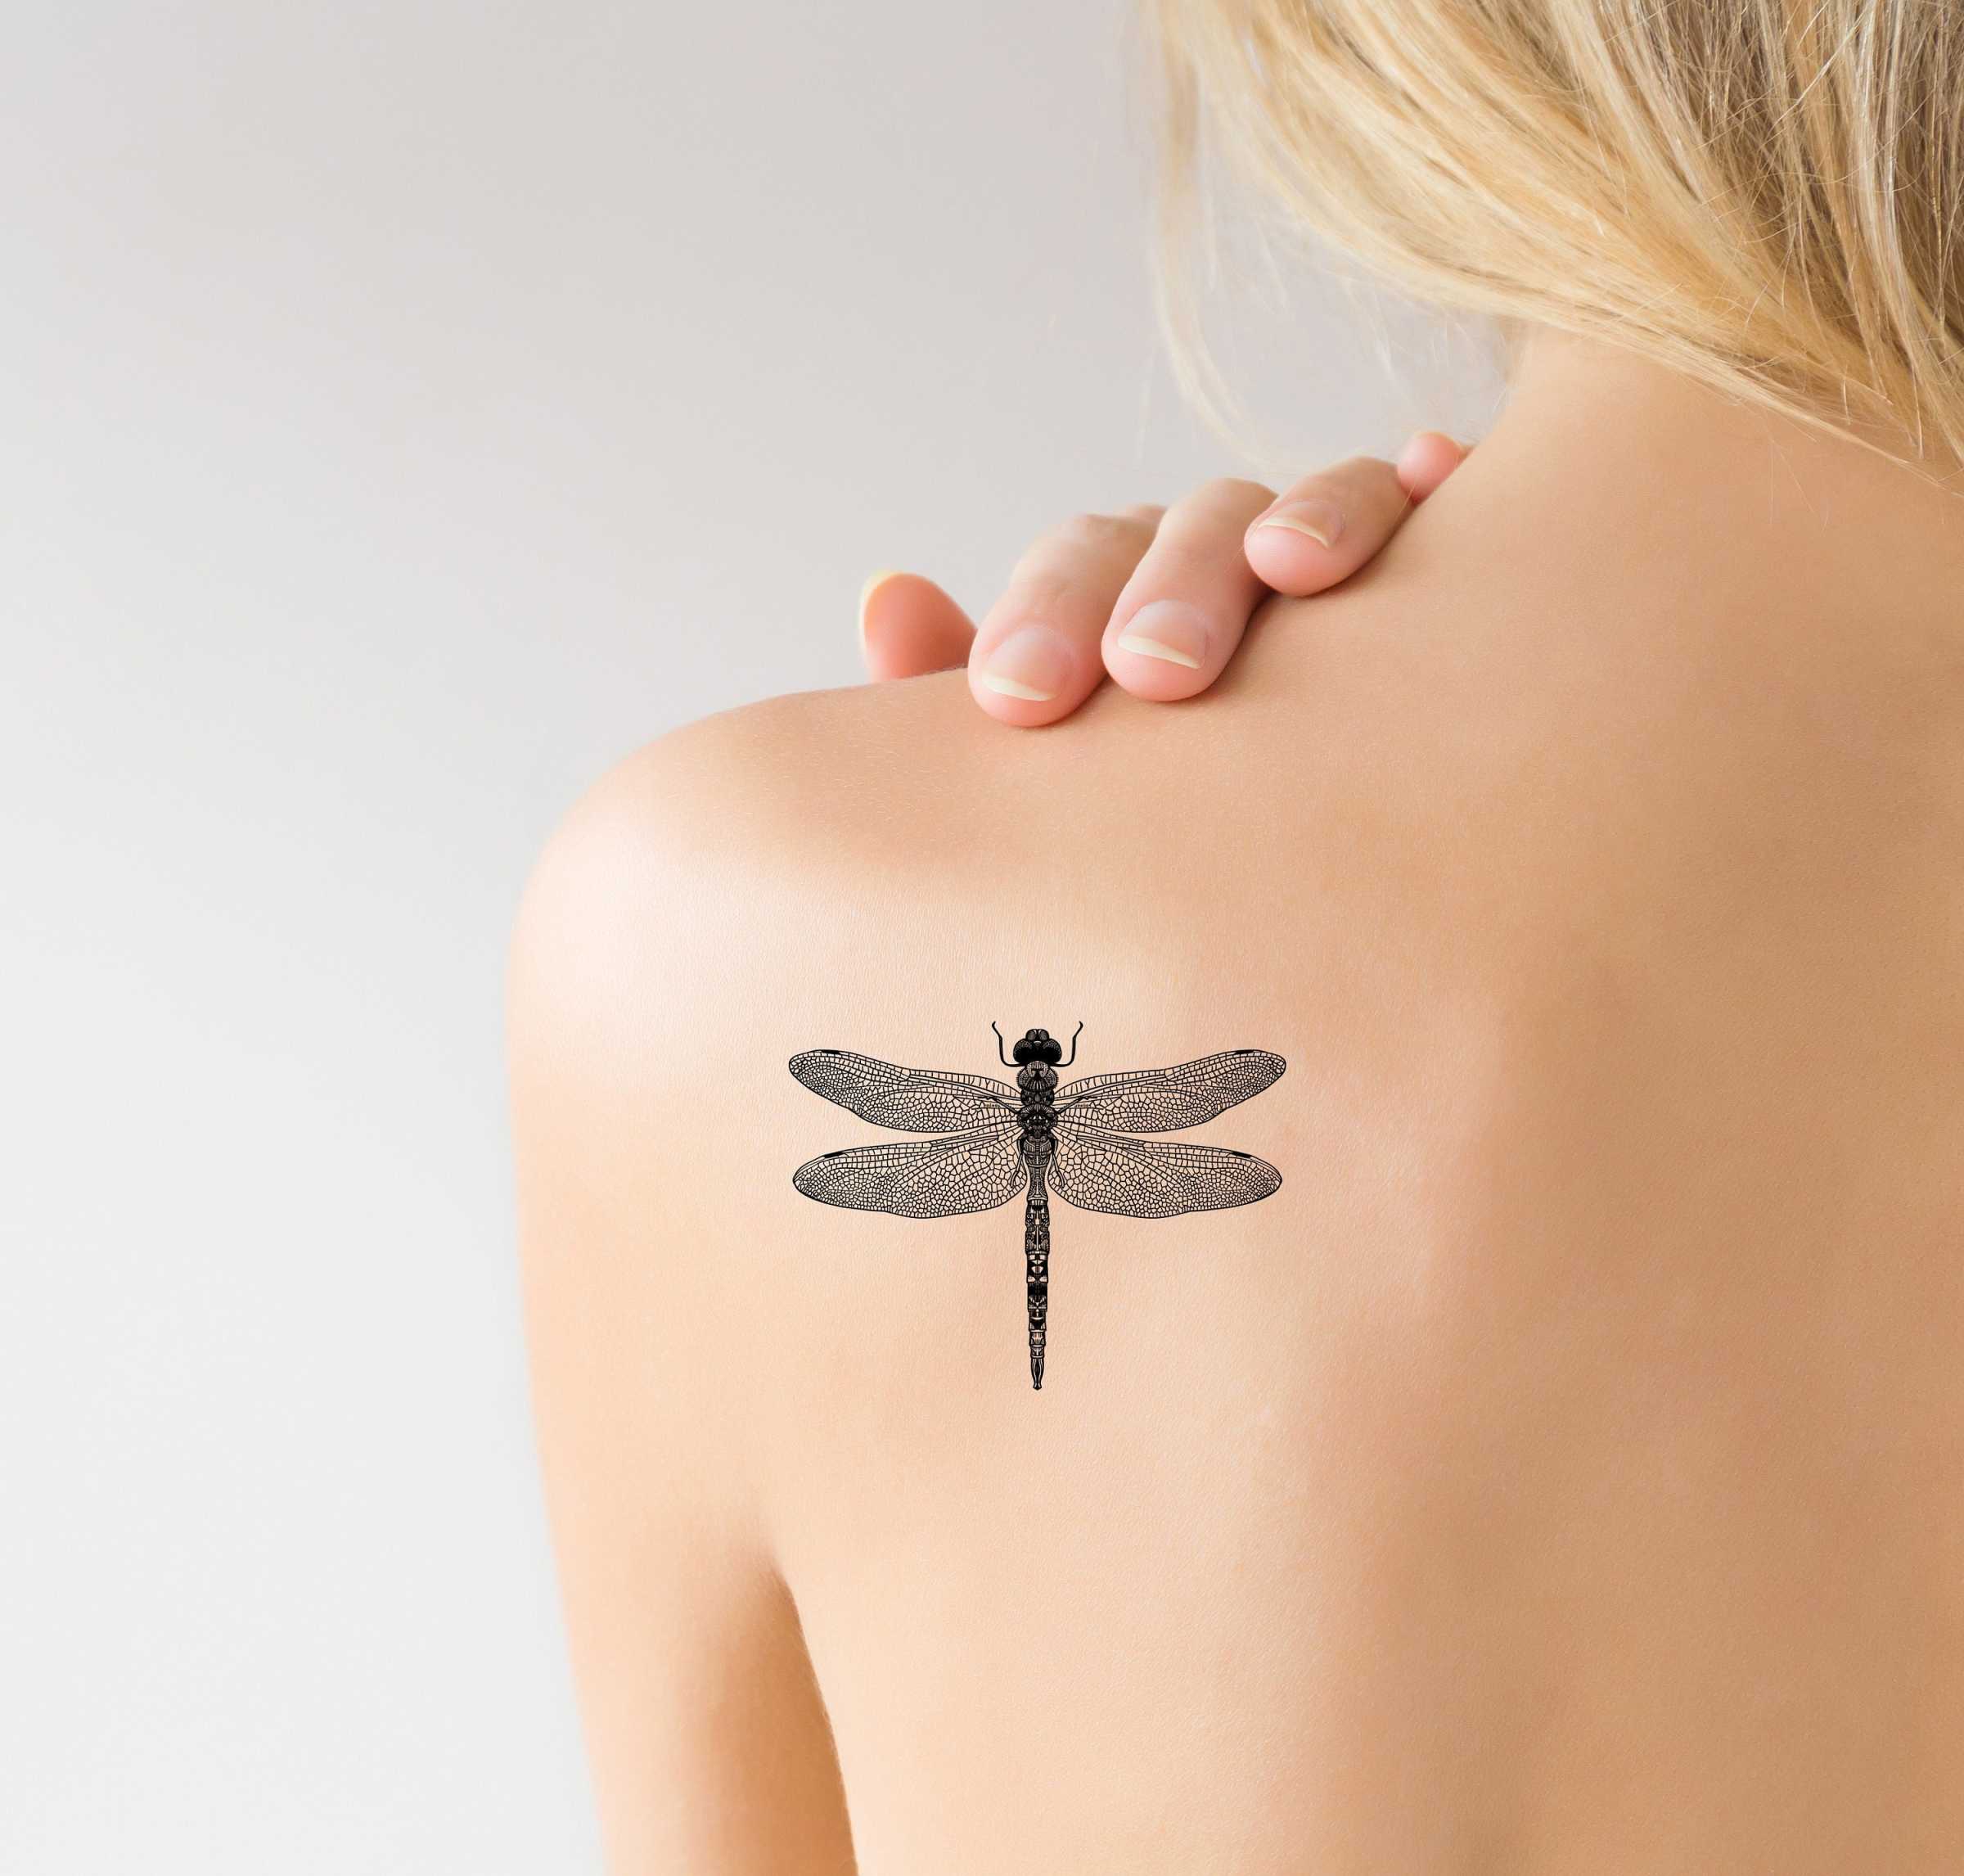 Dragonfly Tattoos - Etsy